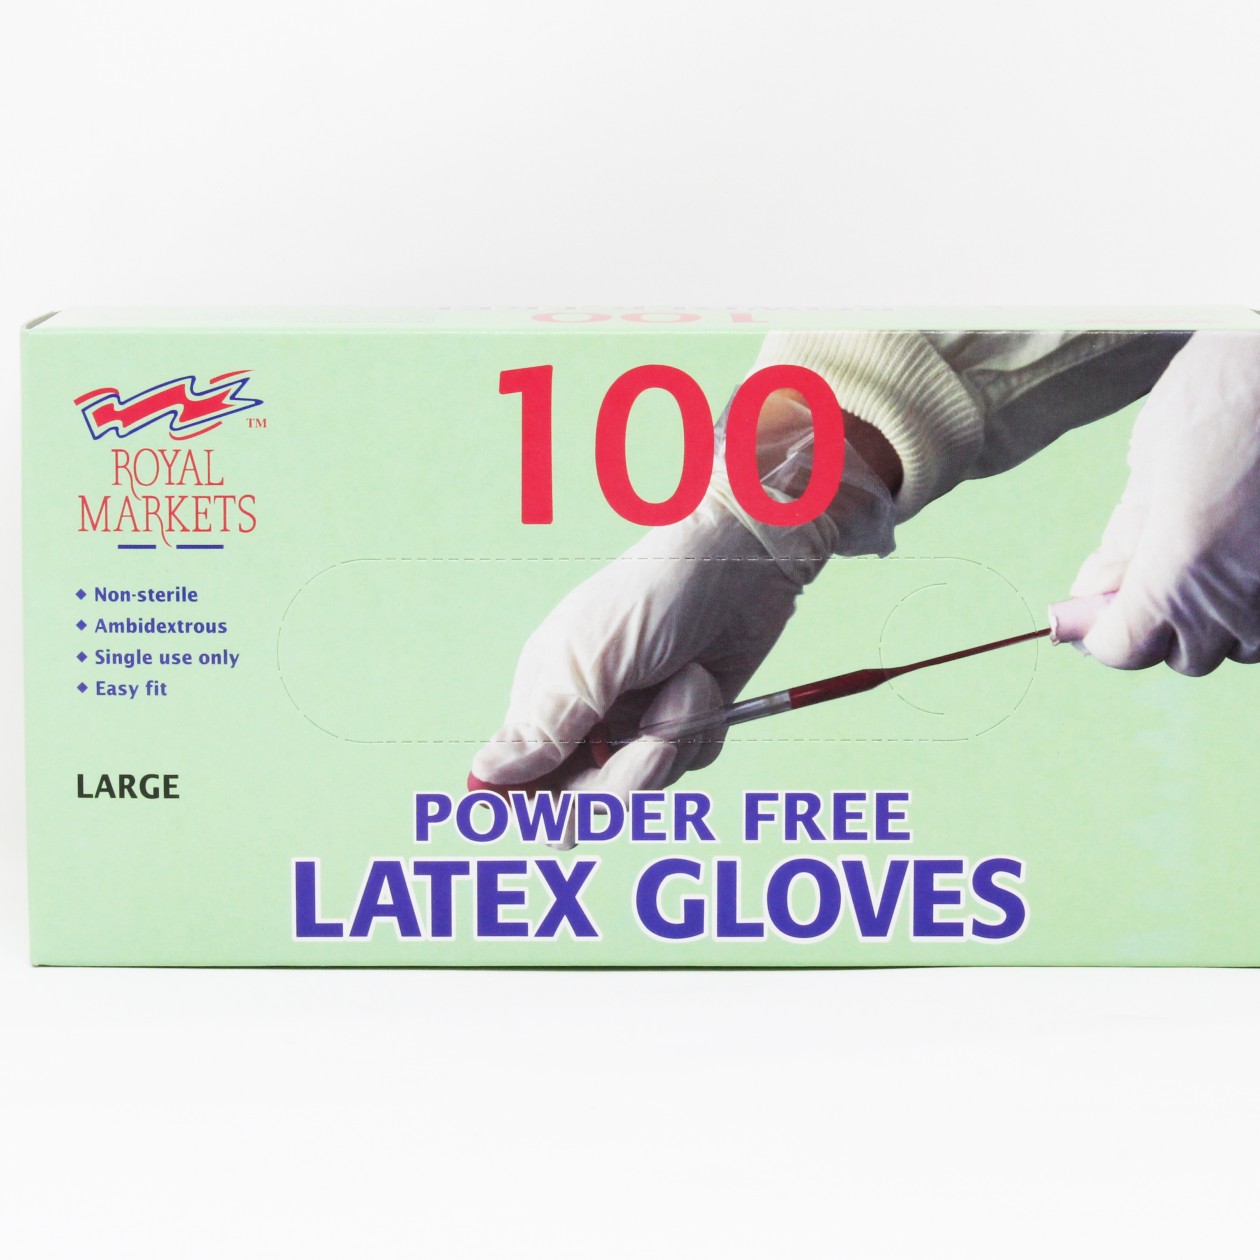 Royal Markets Powder Free Latex Gloves x 100 Large Size